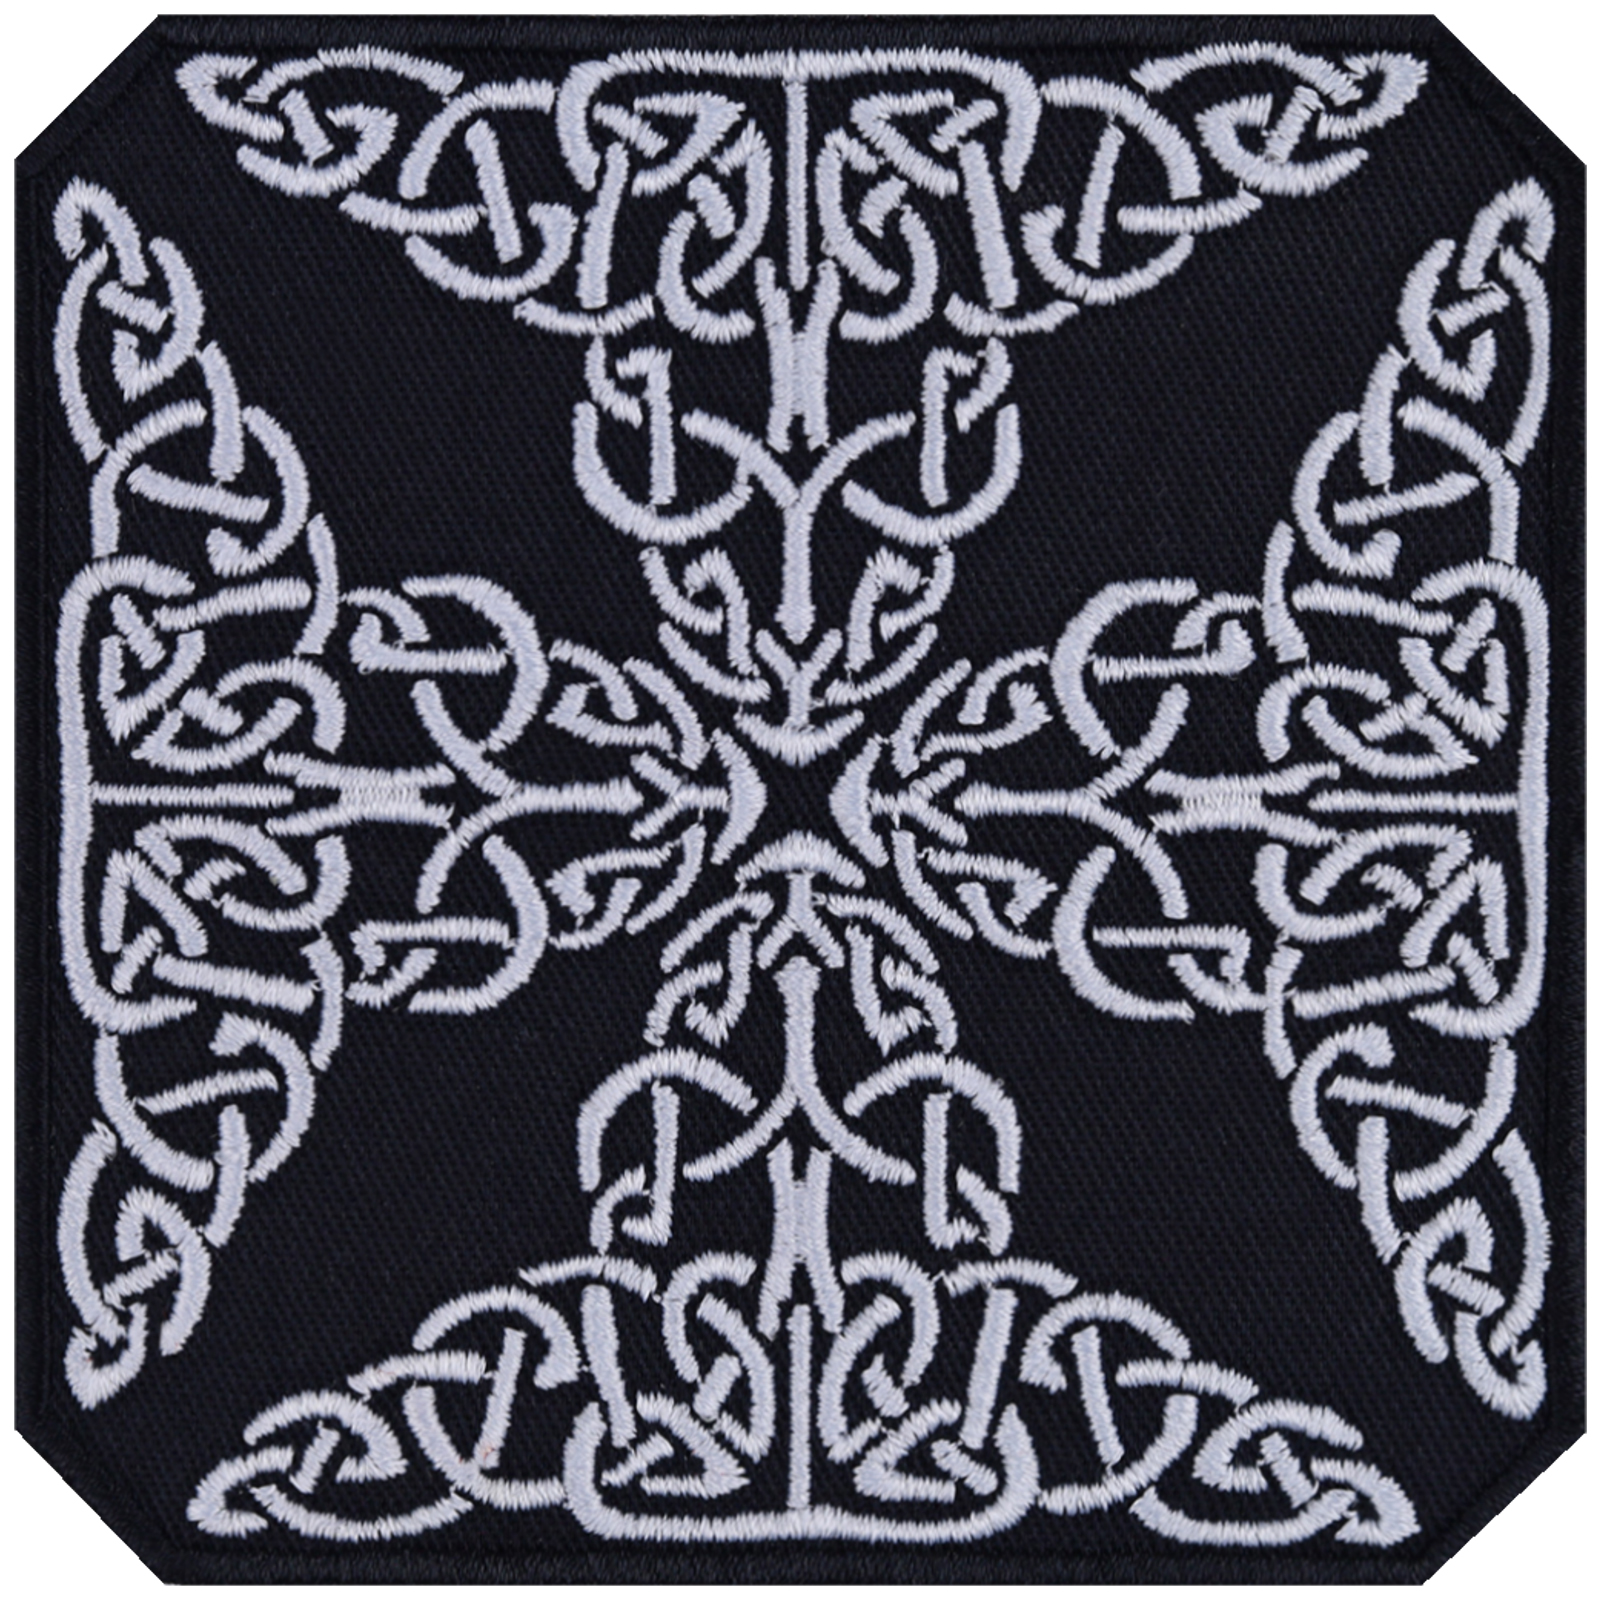 Keltischer Knoten Kreuz - Patch